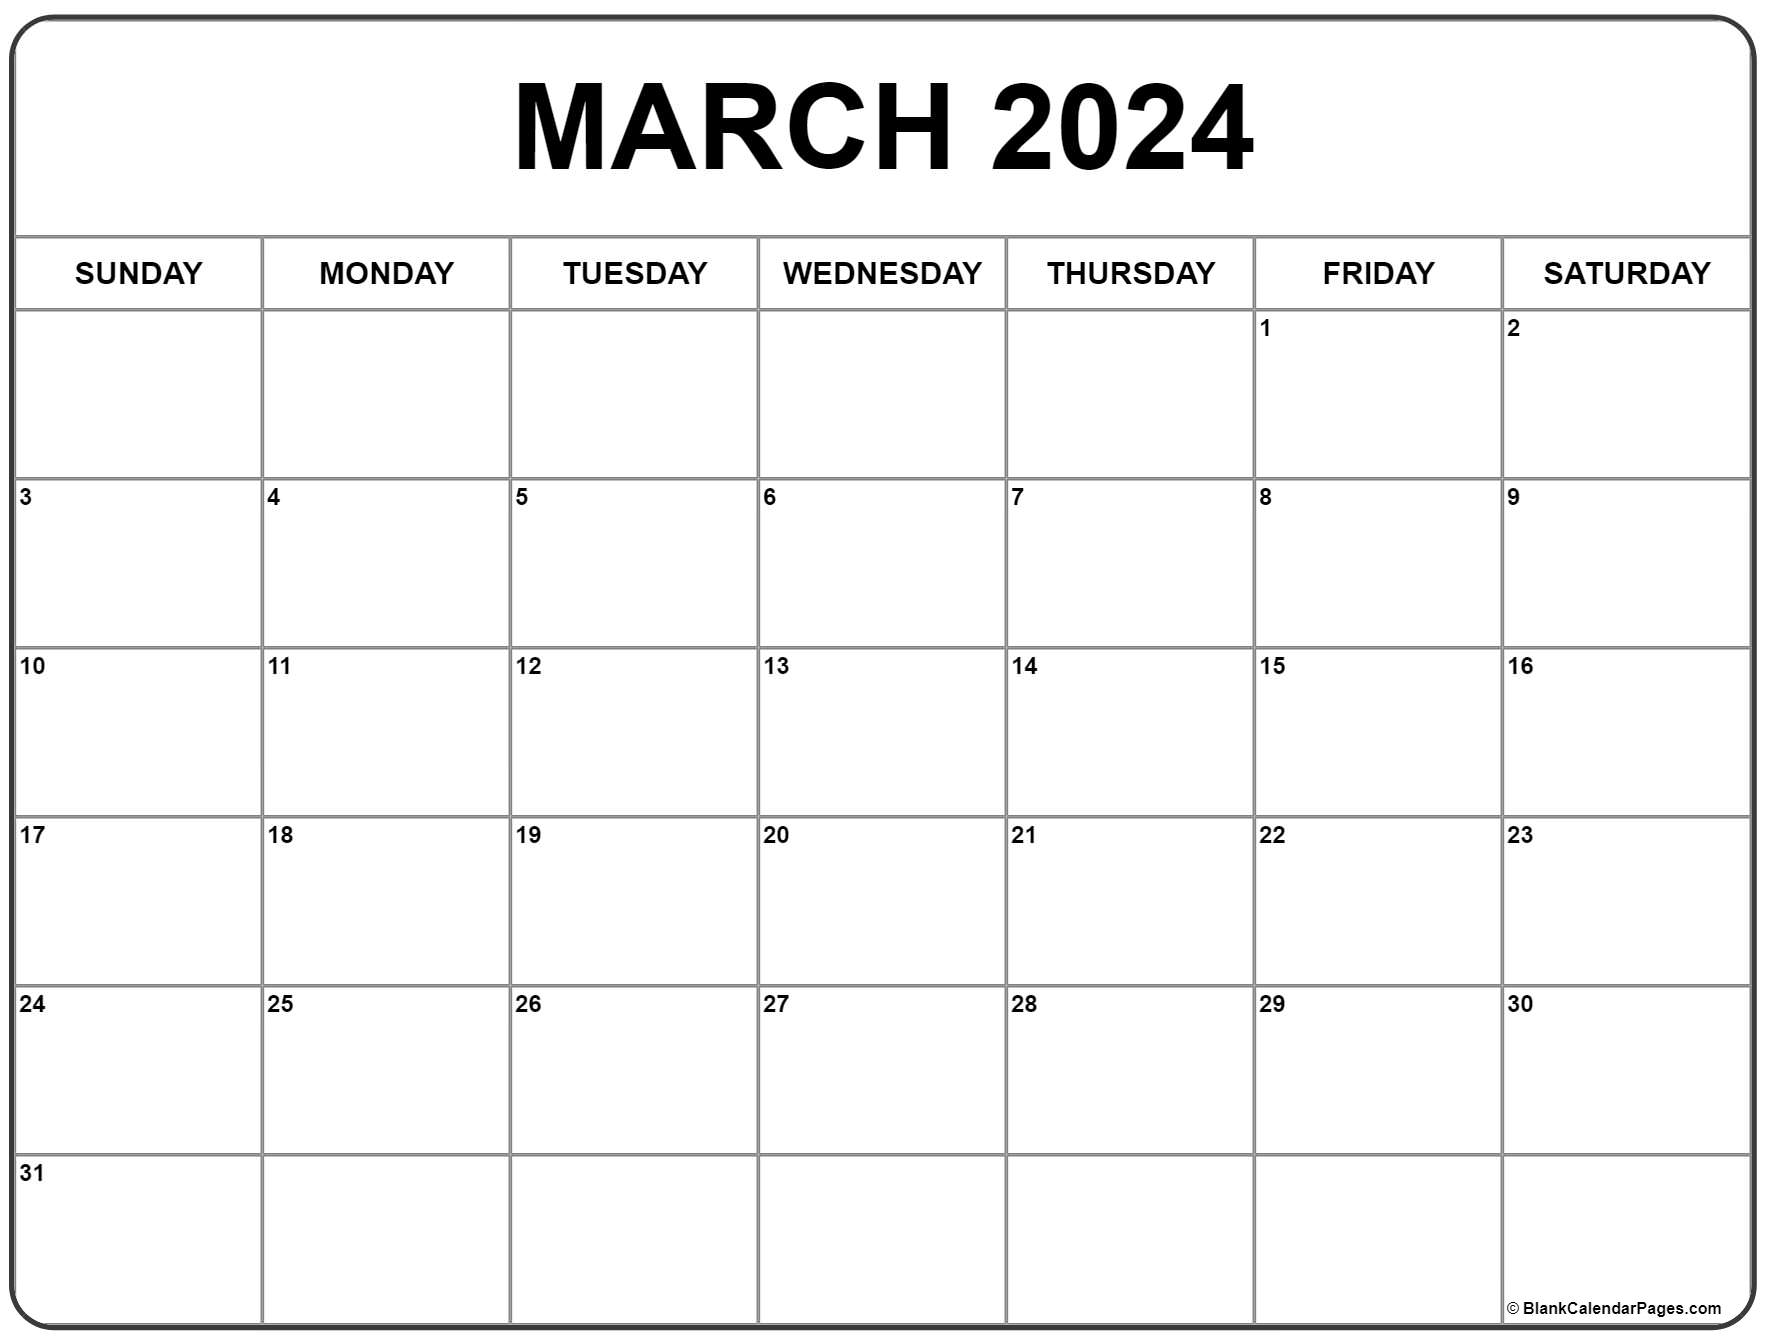 March 2024 Calendar | Free Printable Calendar for Free Printable Monthly Calendar March 2024